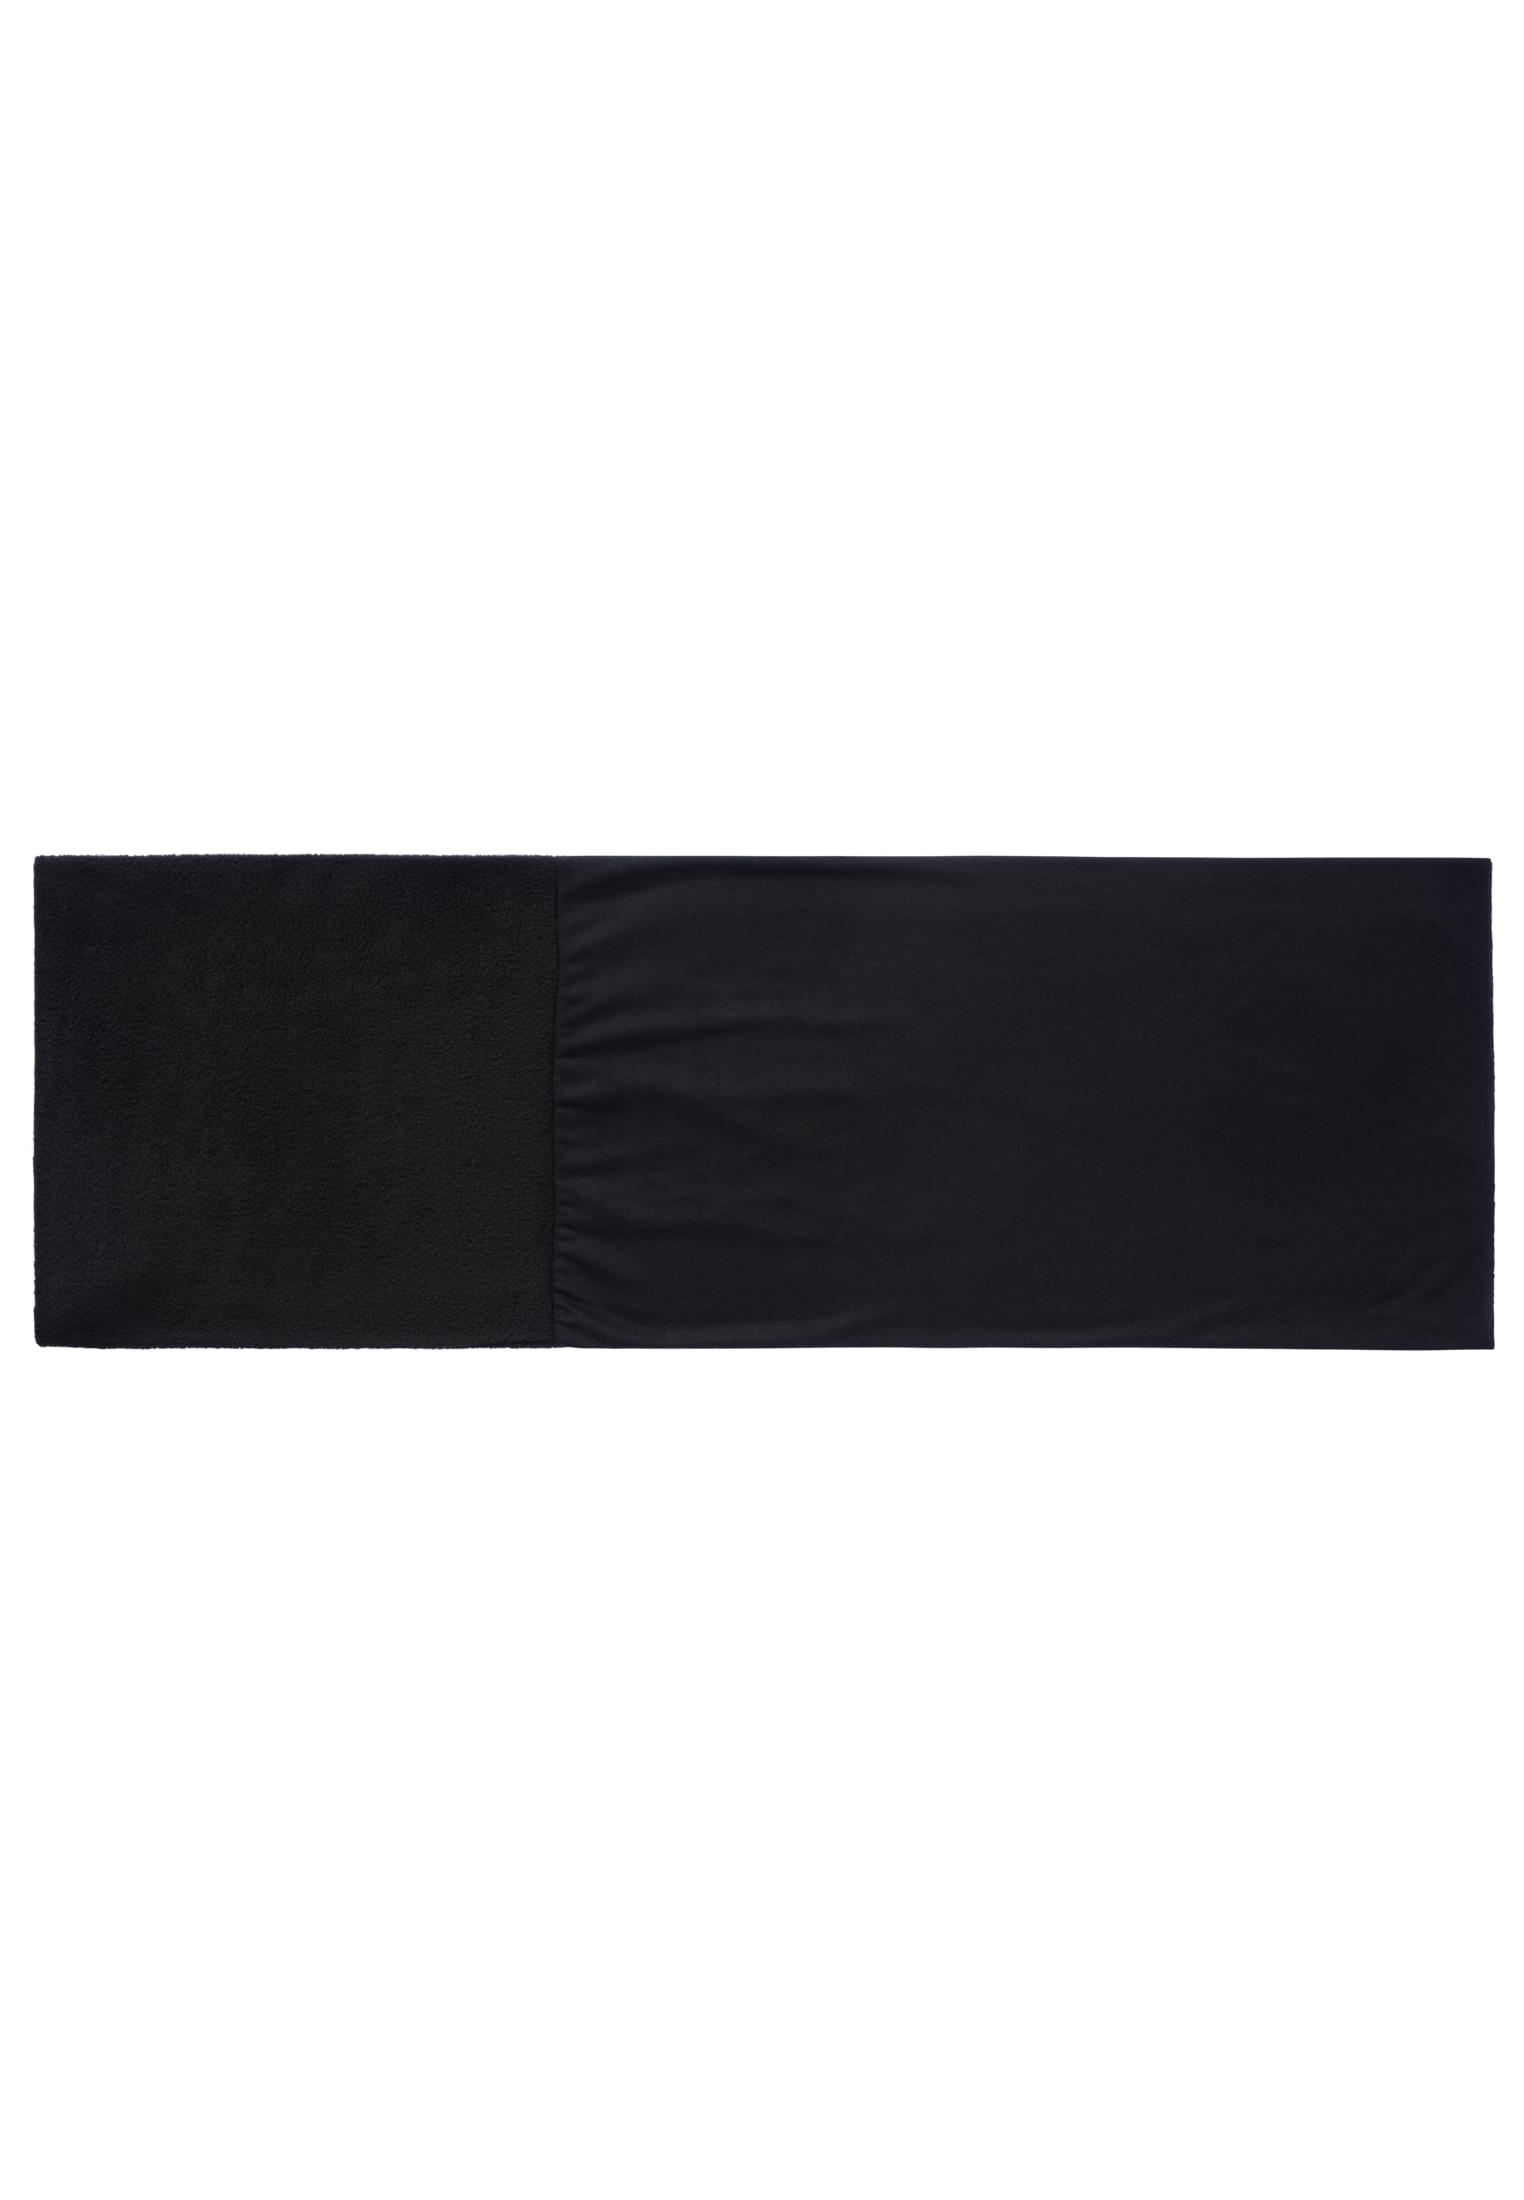 Accessoires Multifunktionstuch Fleece in Farbe black